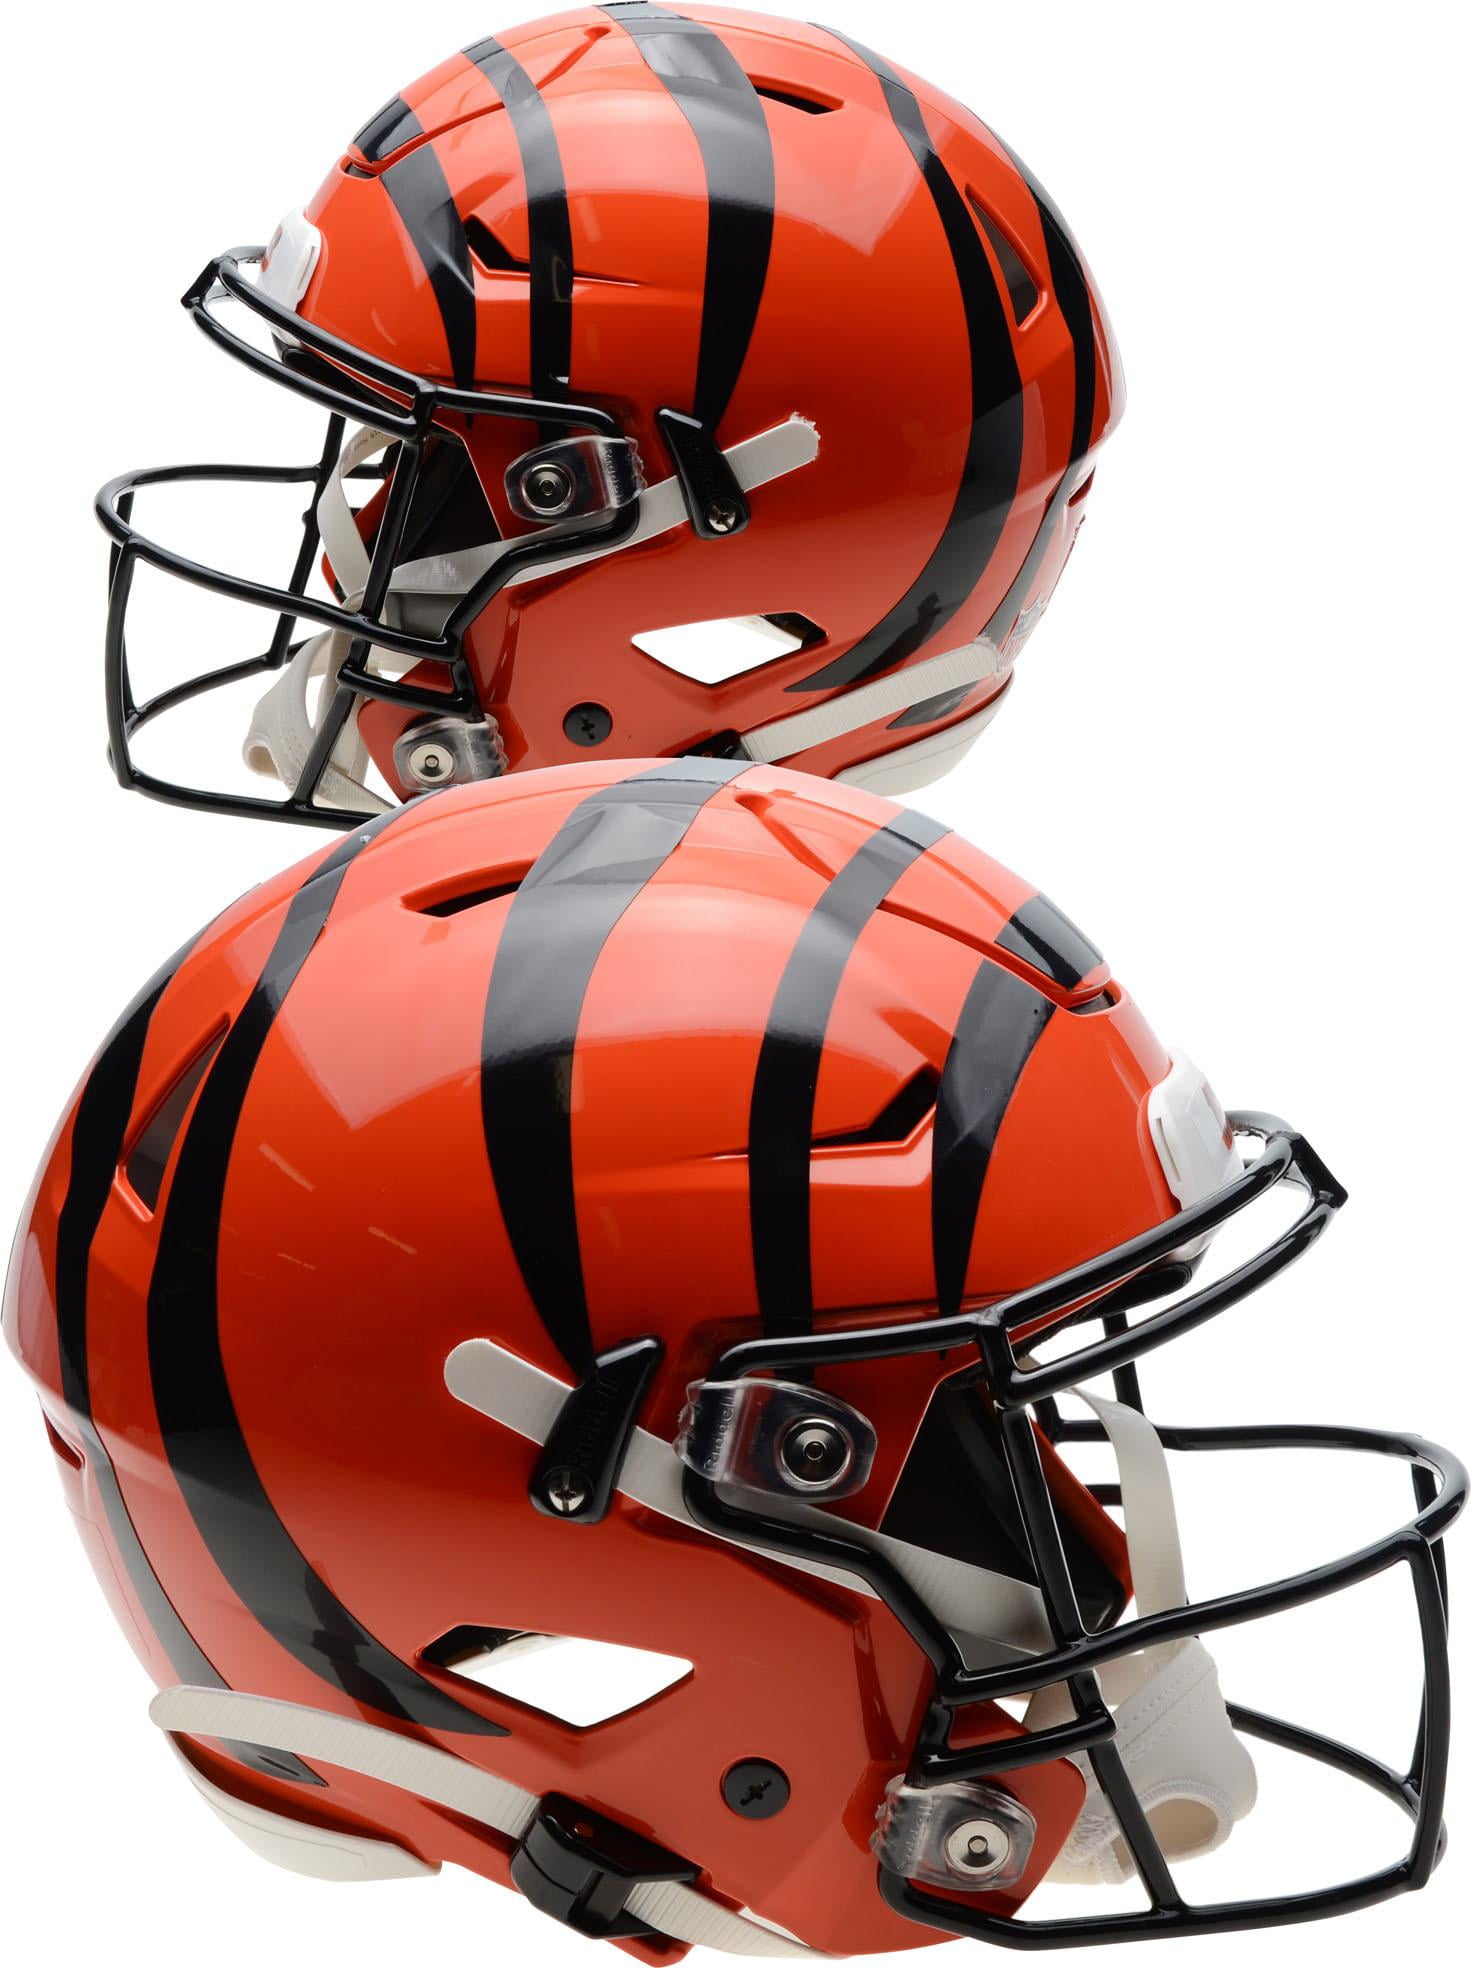 New in Riddell Box Cincinnati Bengals Riddell Speed Mini Football Helmet 